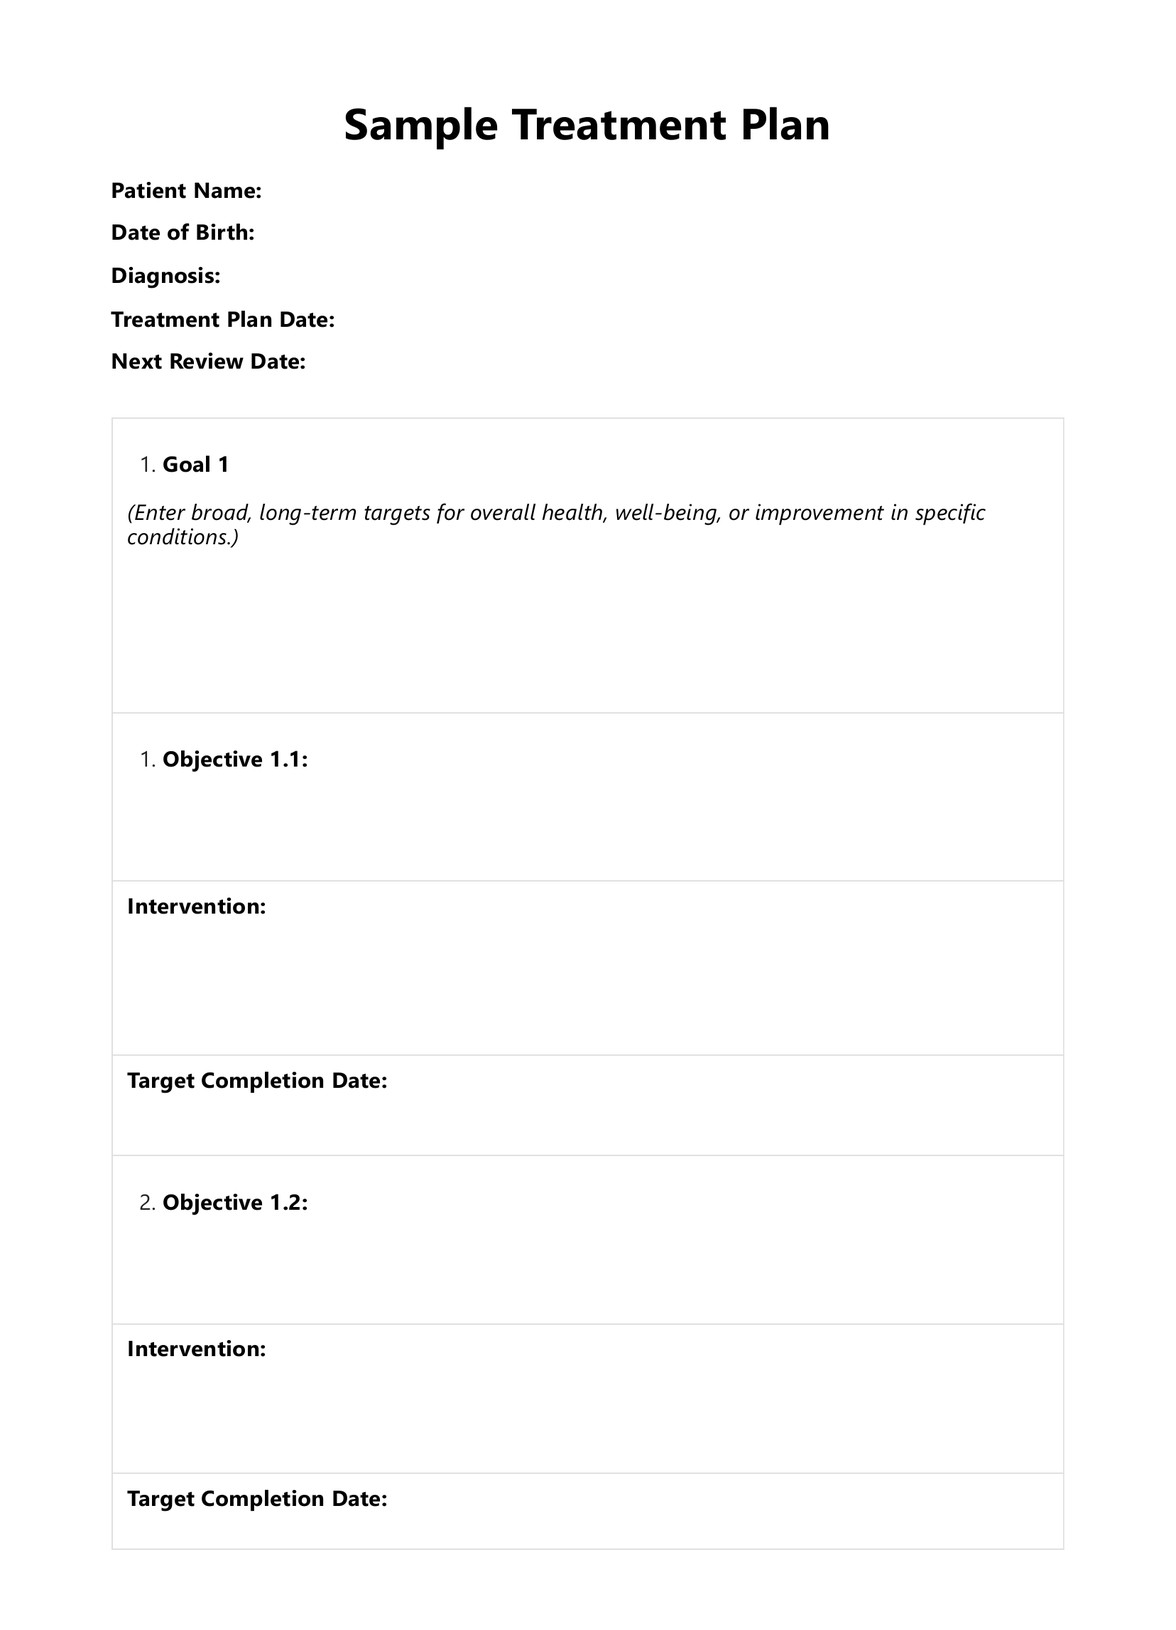 Sample Treatment Plan PDF Example